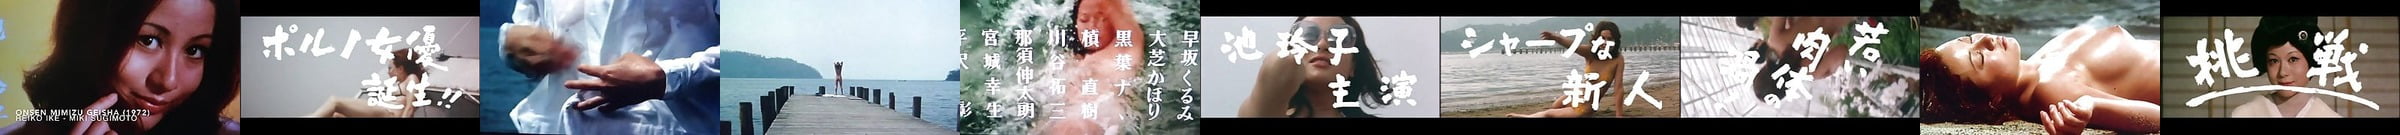 Miki Sugimoto Free Porn Star Videos Xhamster